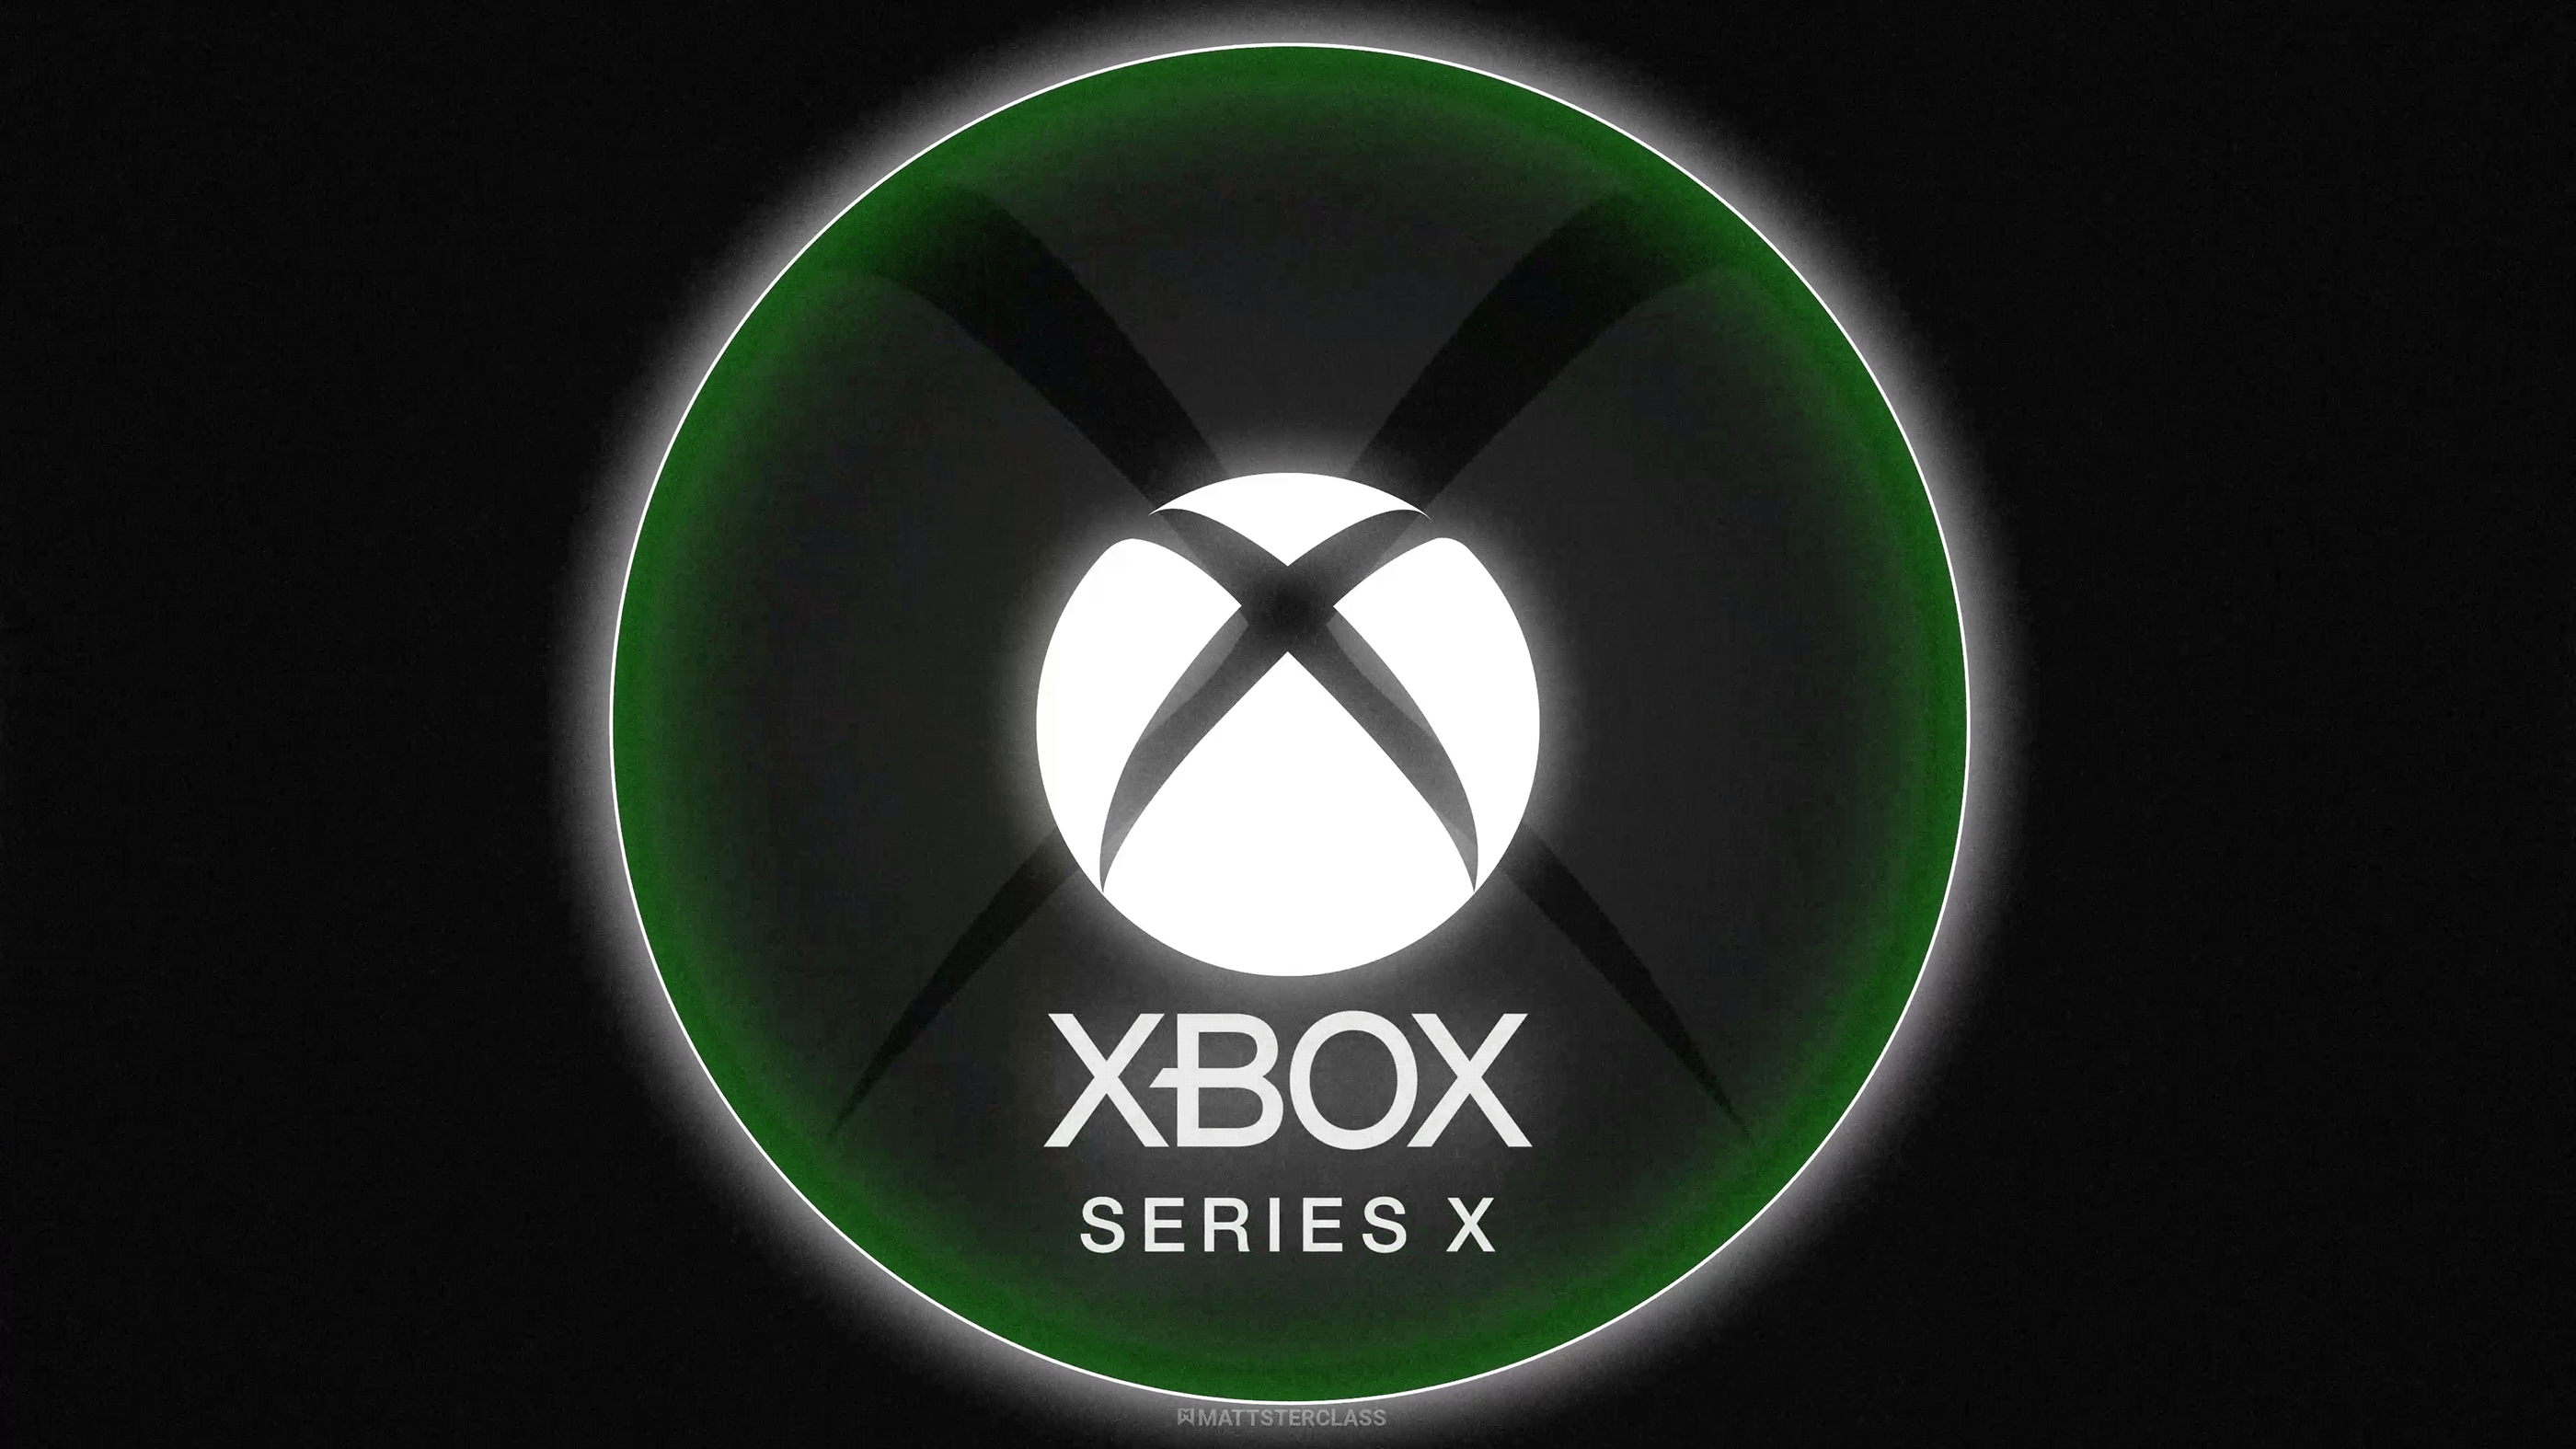 Купить ключ xbox series s. Xbox 360 Series s. Логотип Xbox Series x. Аватарки Xbox. Иксбокс сириес с.